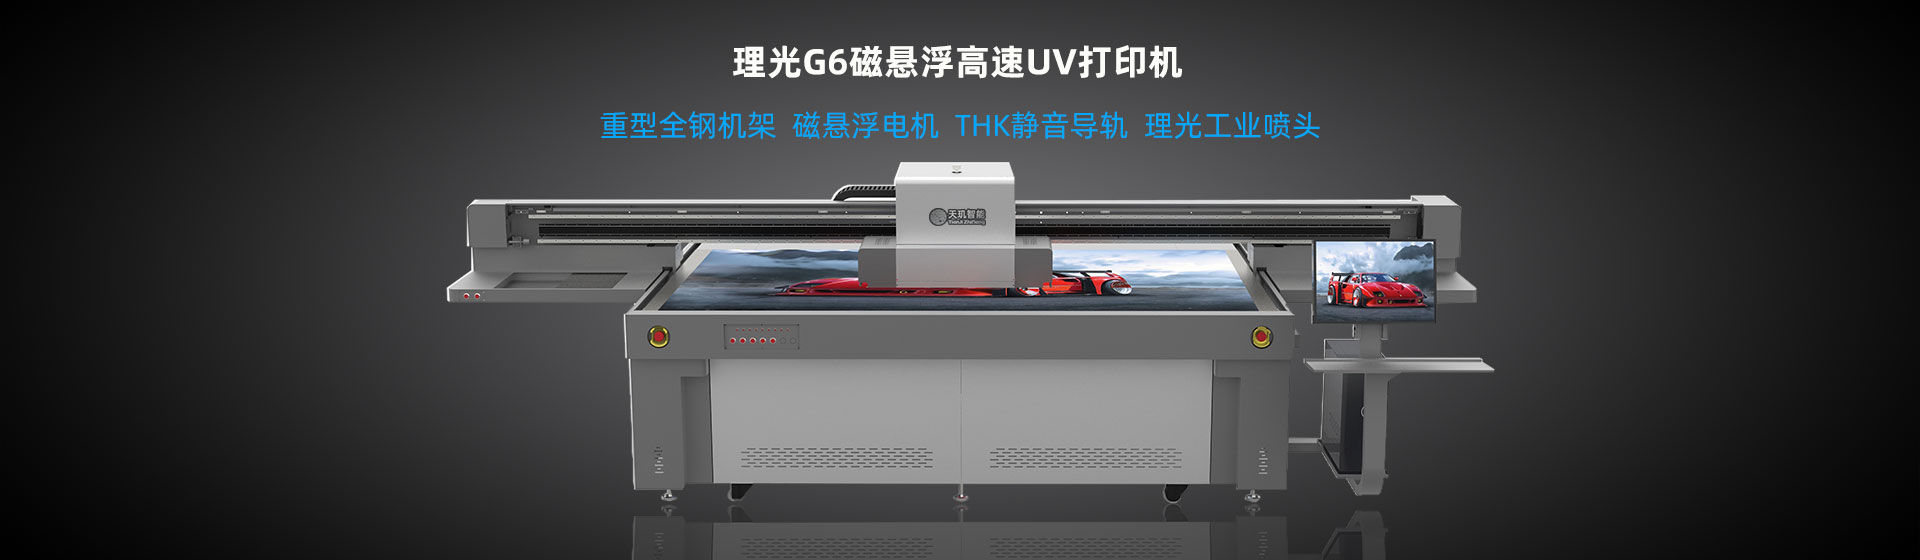 2513UV打印机